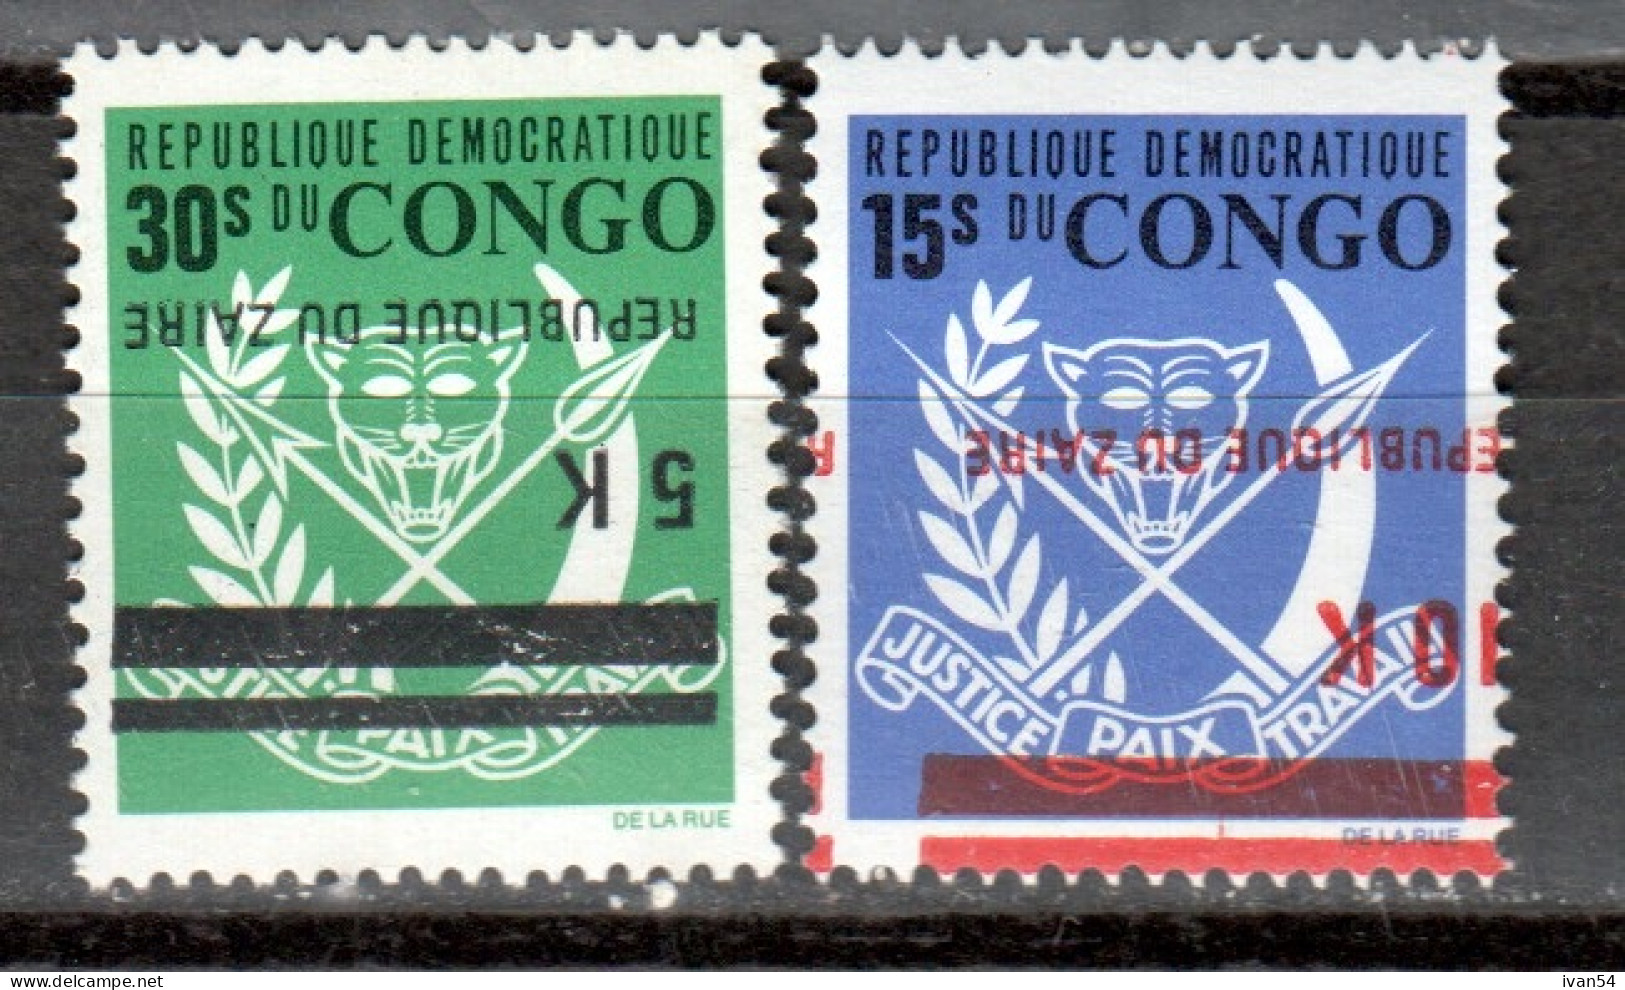 ZAIRE 912 + 913 MNH  **  – OMGEK. OPDRUK – SURCHARGE RENVERSEE (1977) - Unused Stamps